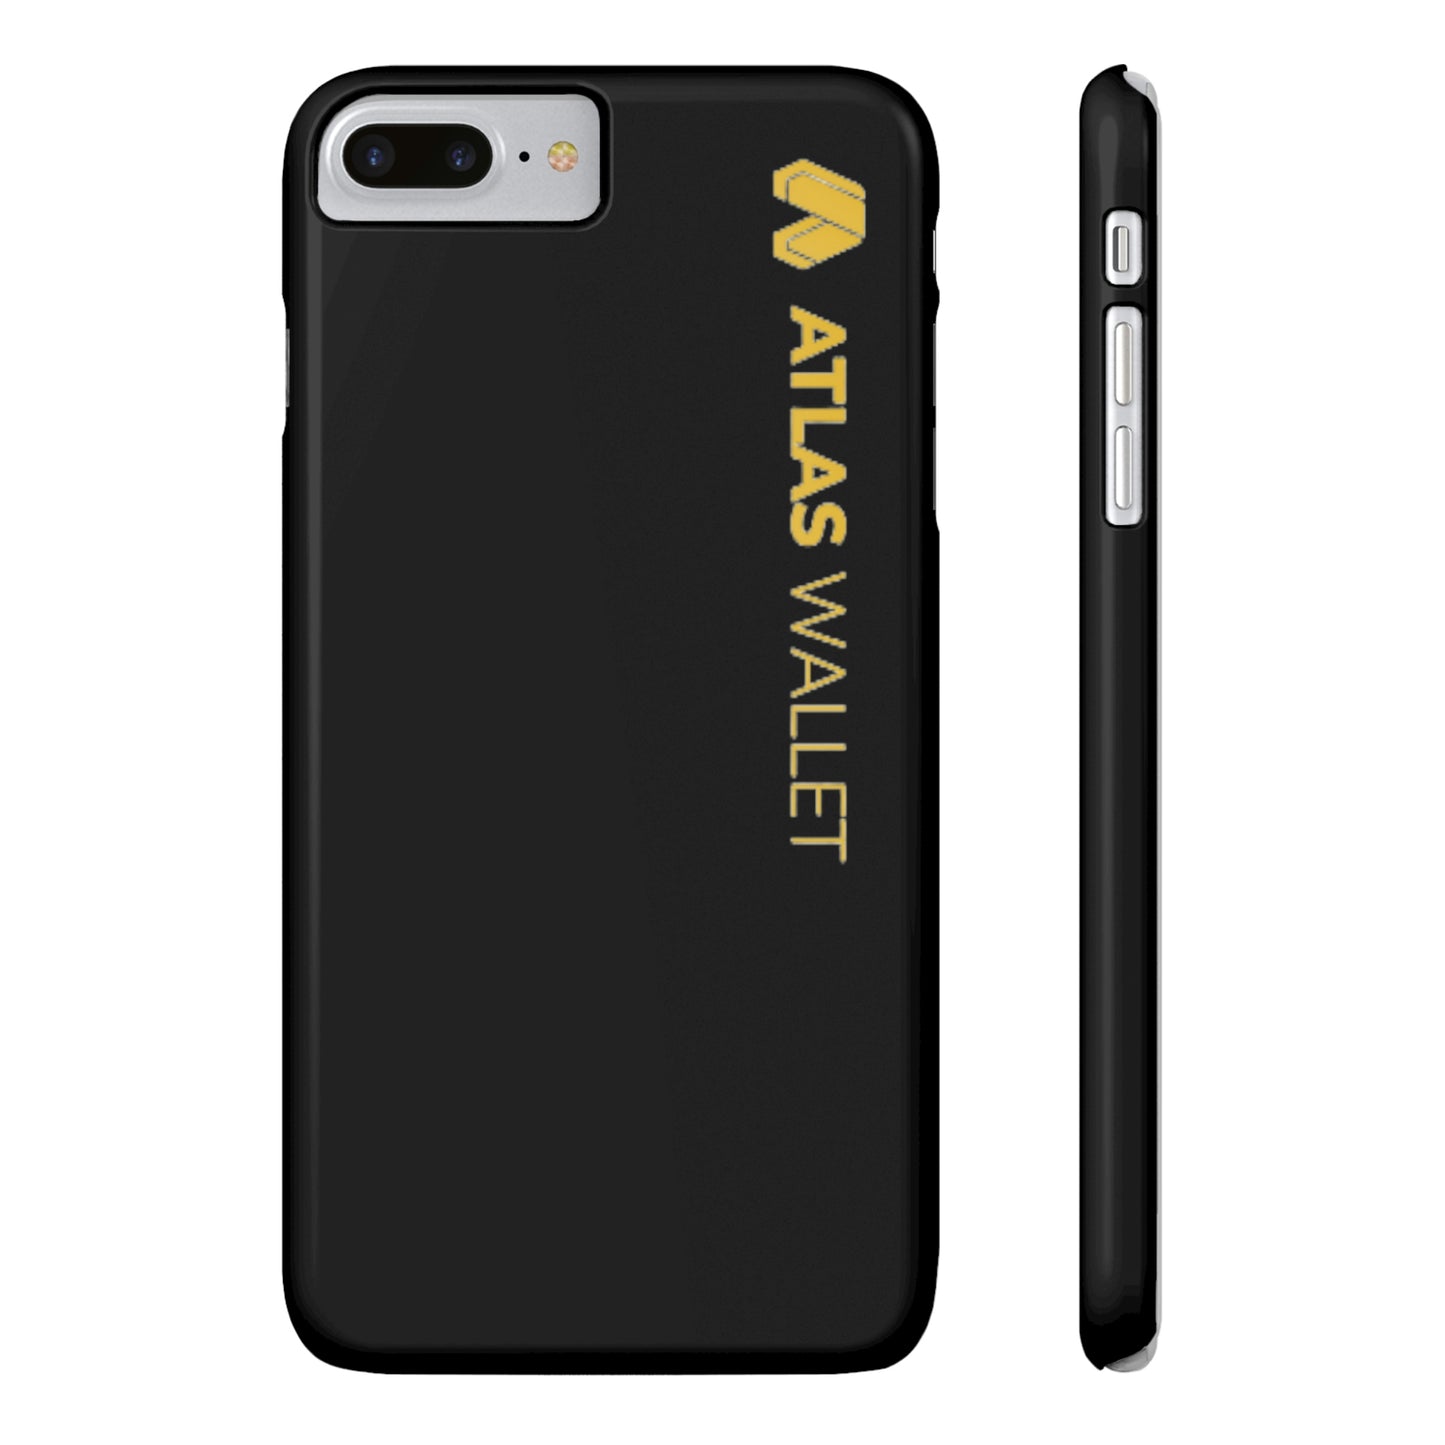 Slim Phone Cases, Case-Mate - Atlas Wallet with logo (Black)